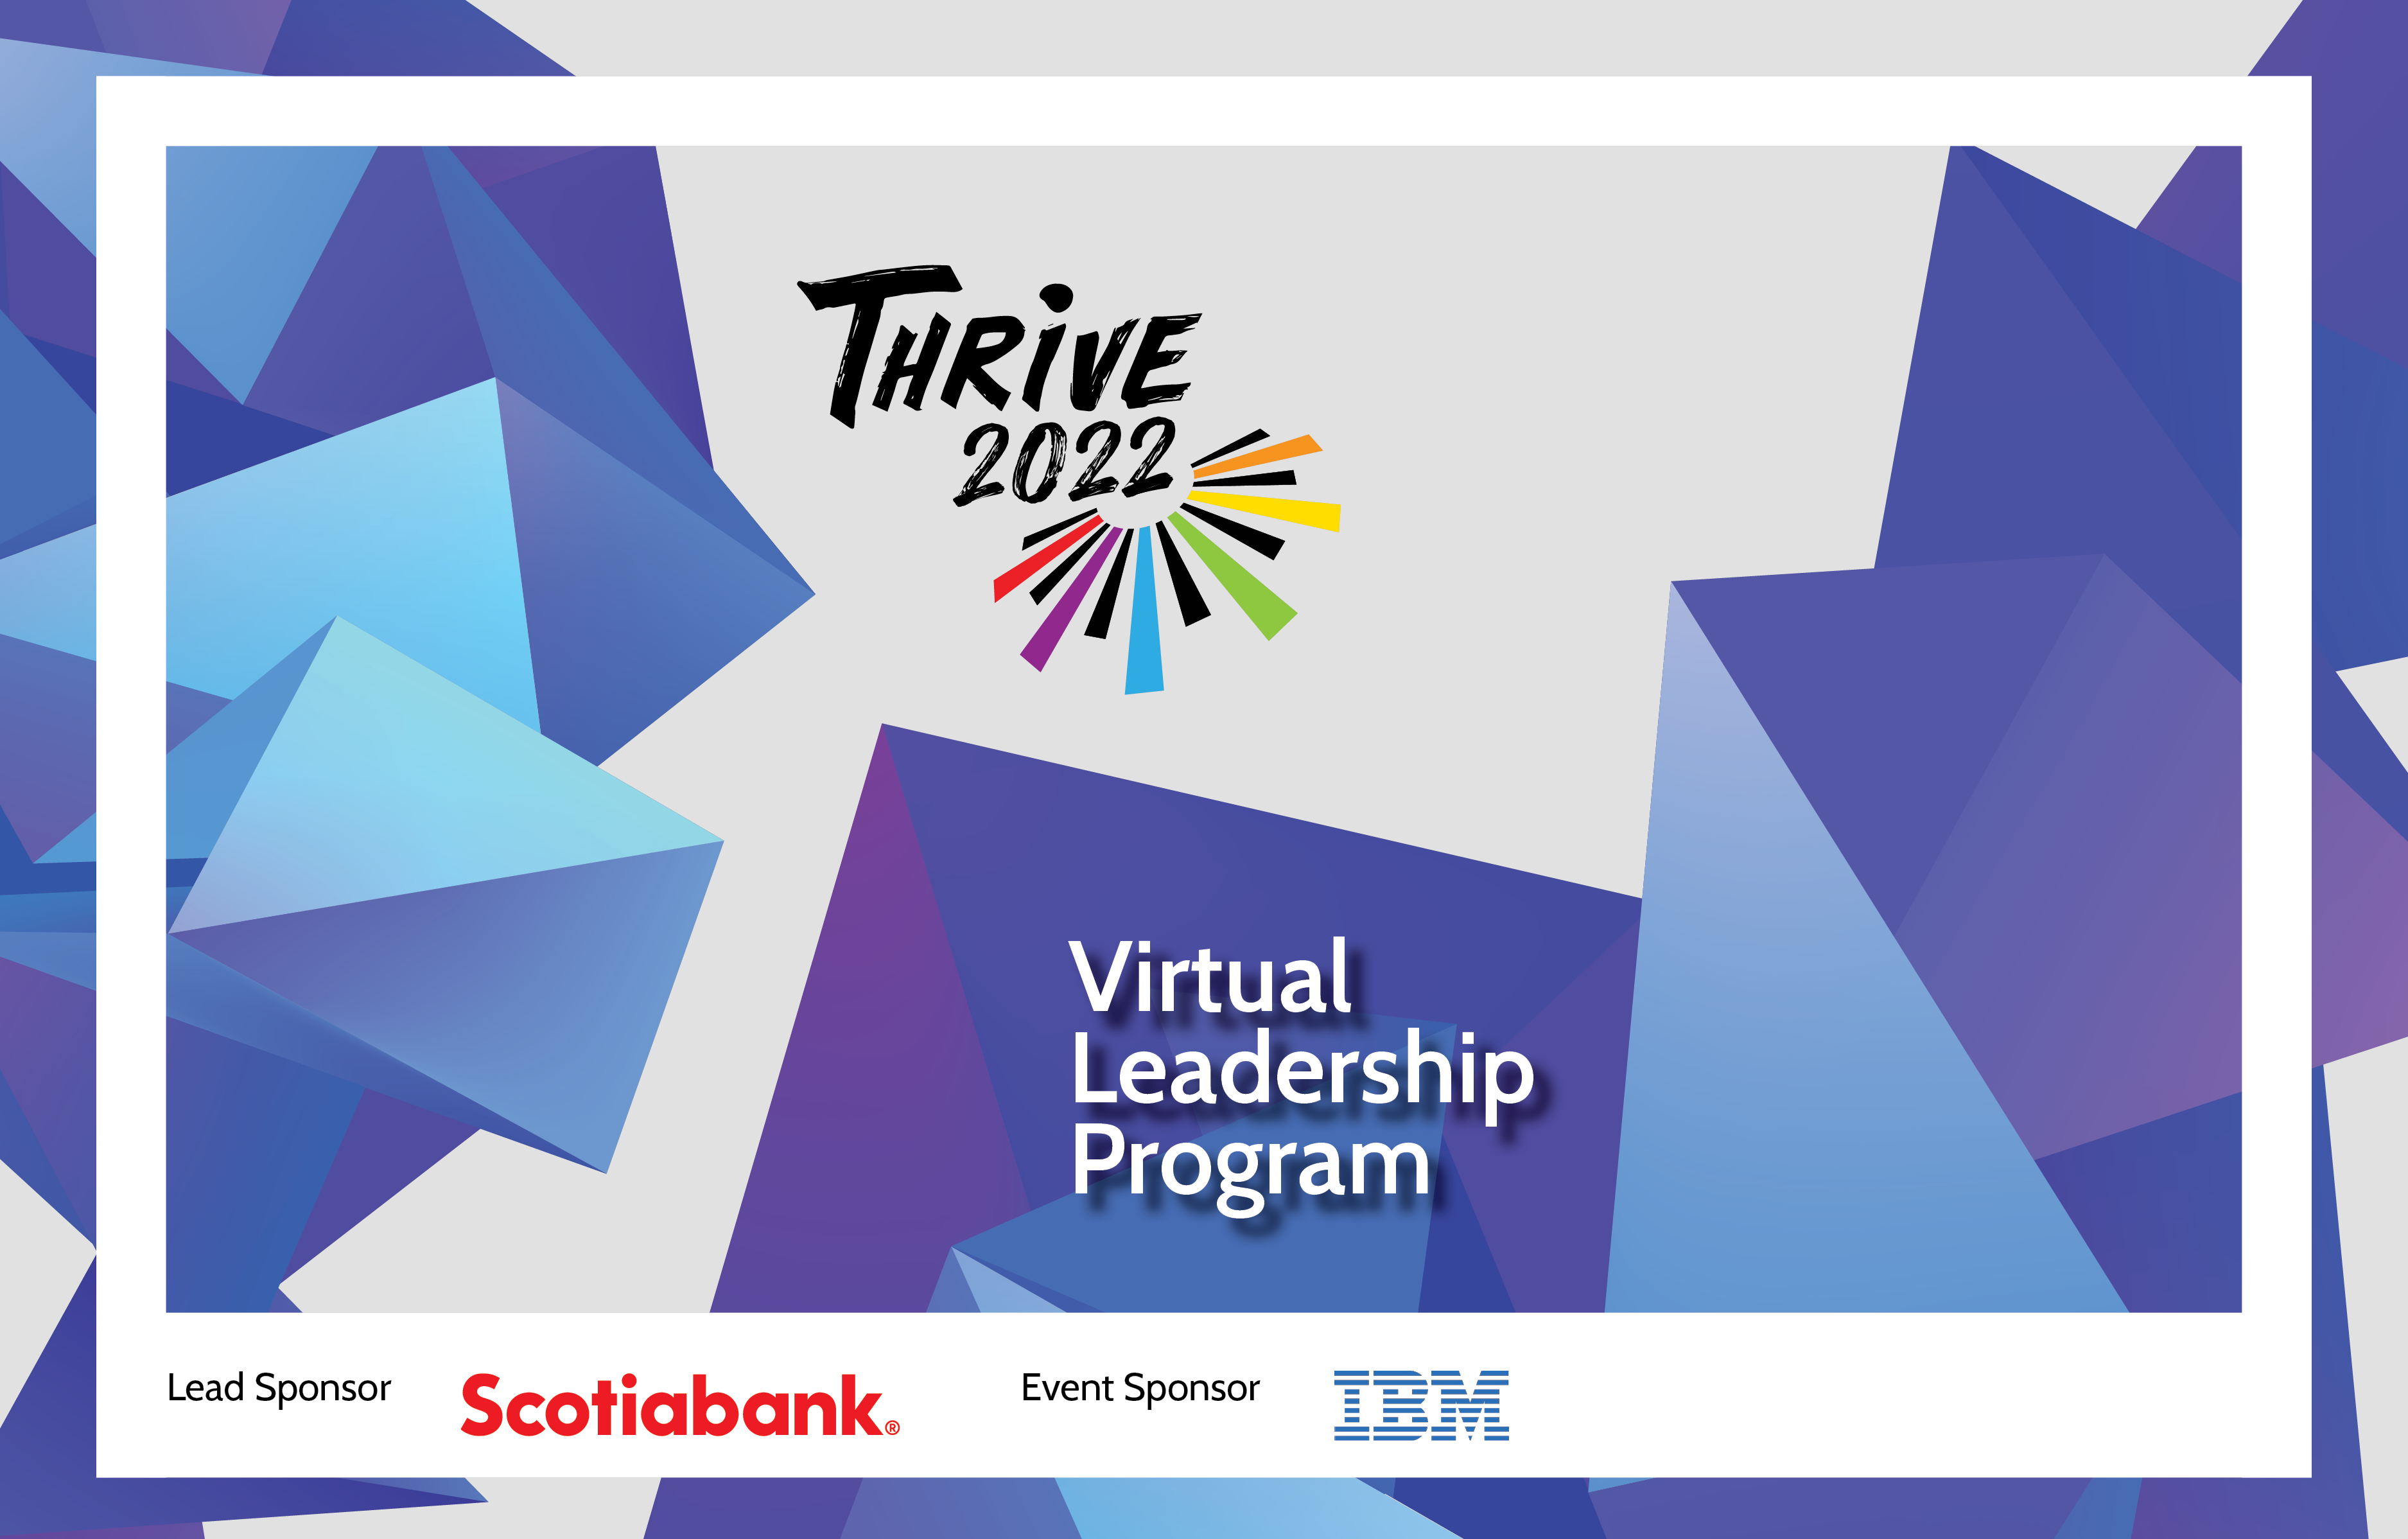 THRIVE 2022 - Virtual Leadership Program - Lead Sponsor Scotiabank (logo) - Event Sponsor IBM (logo)